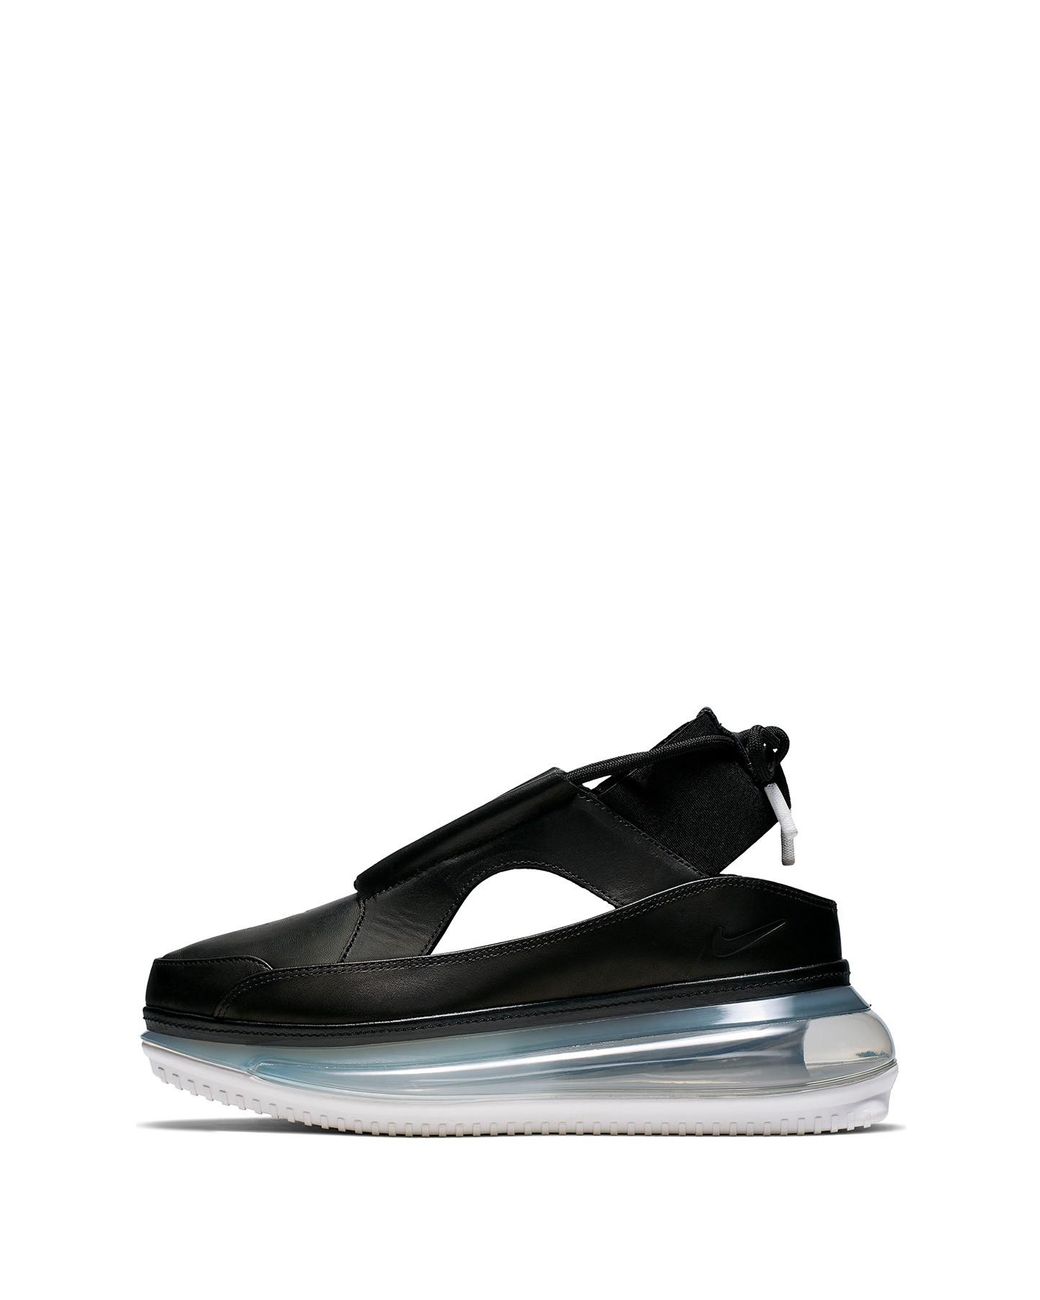 Thermal Brawl Superiority Nike Air Max Ff 720 Shoe in Black | Lyst